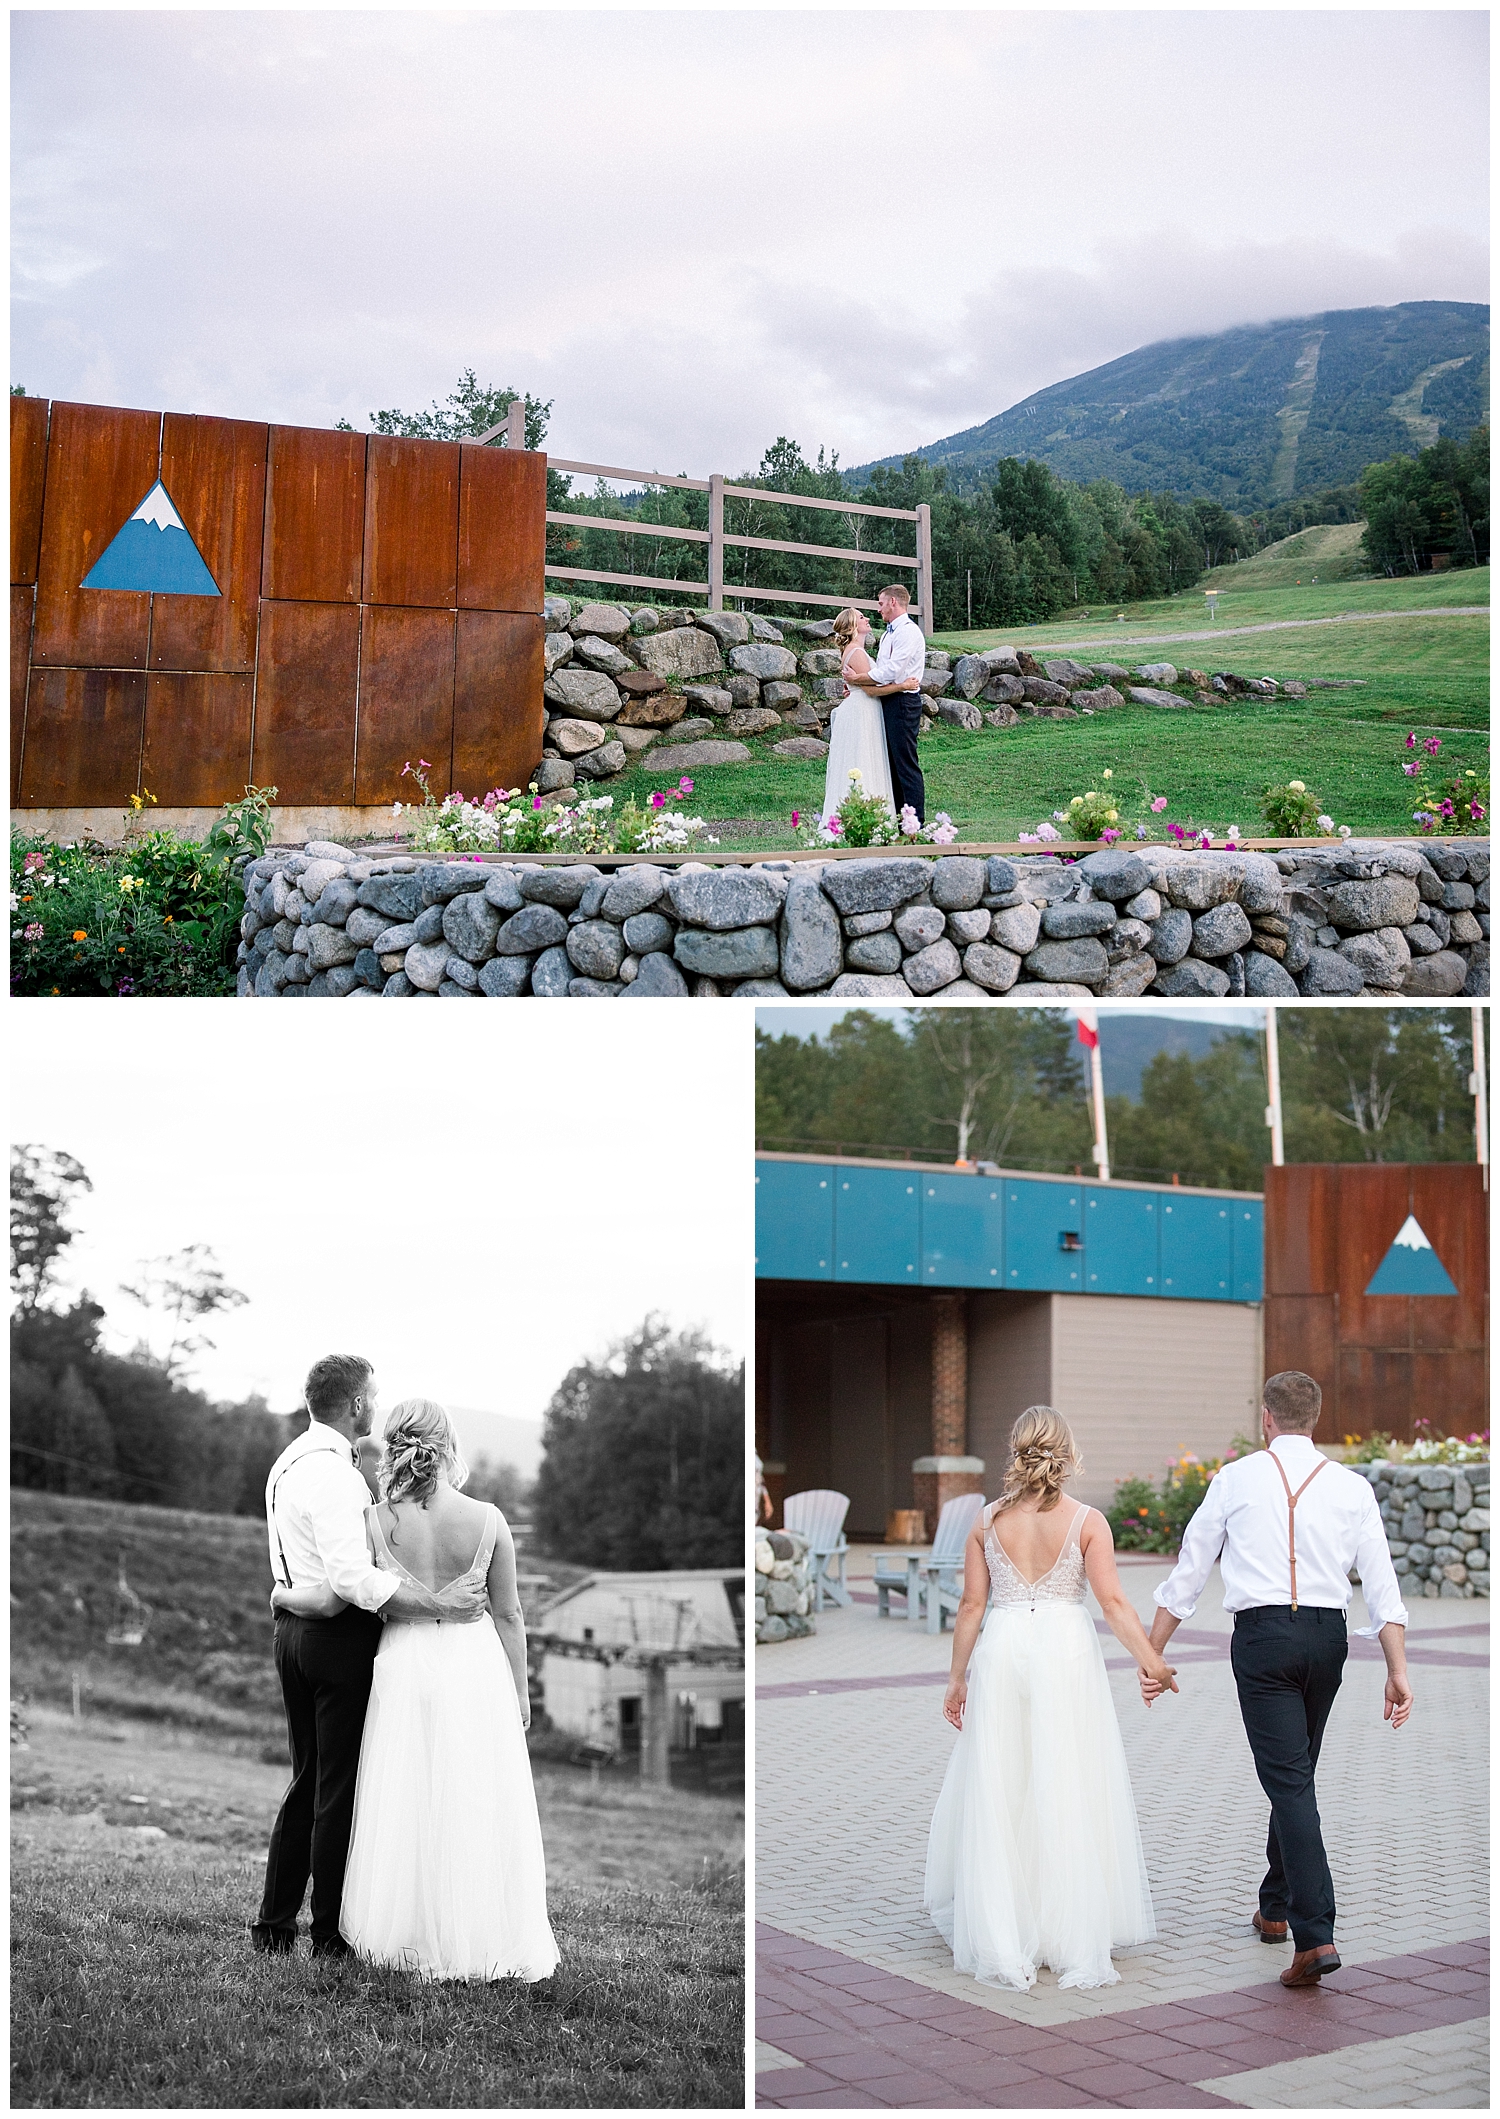 Sugarloaf Mountain Resort Wedding in Maine, photos by Halie Olszowy.